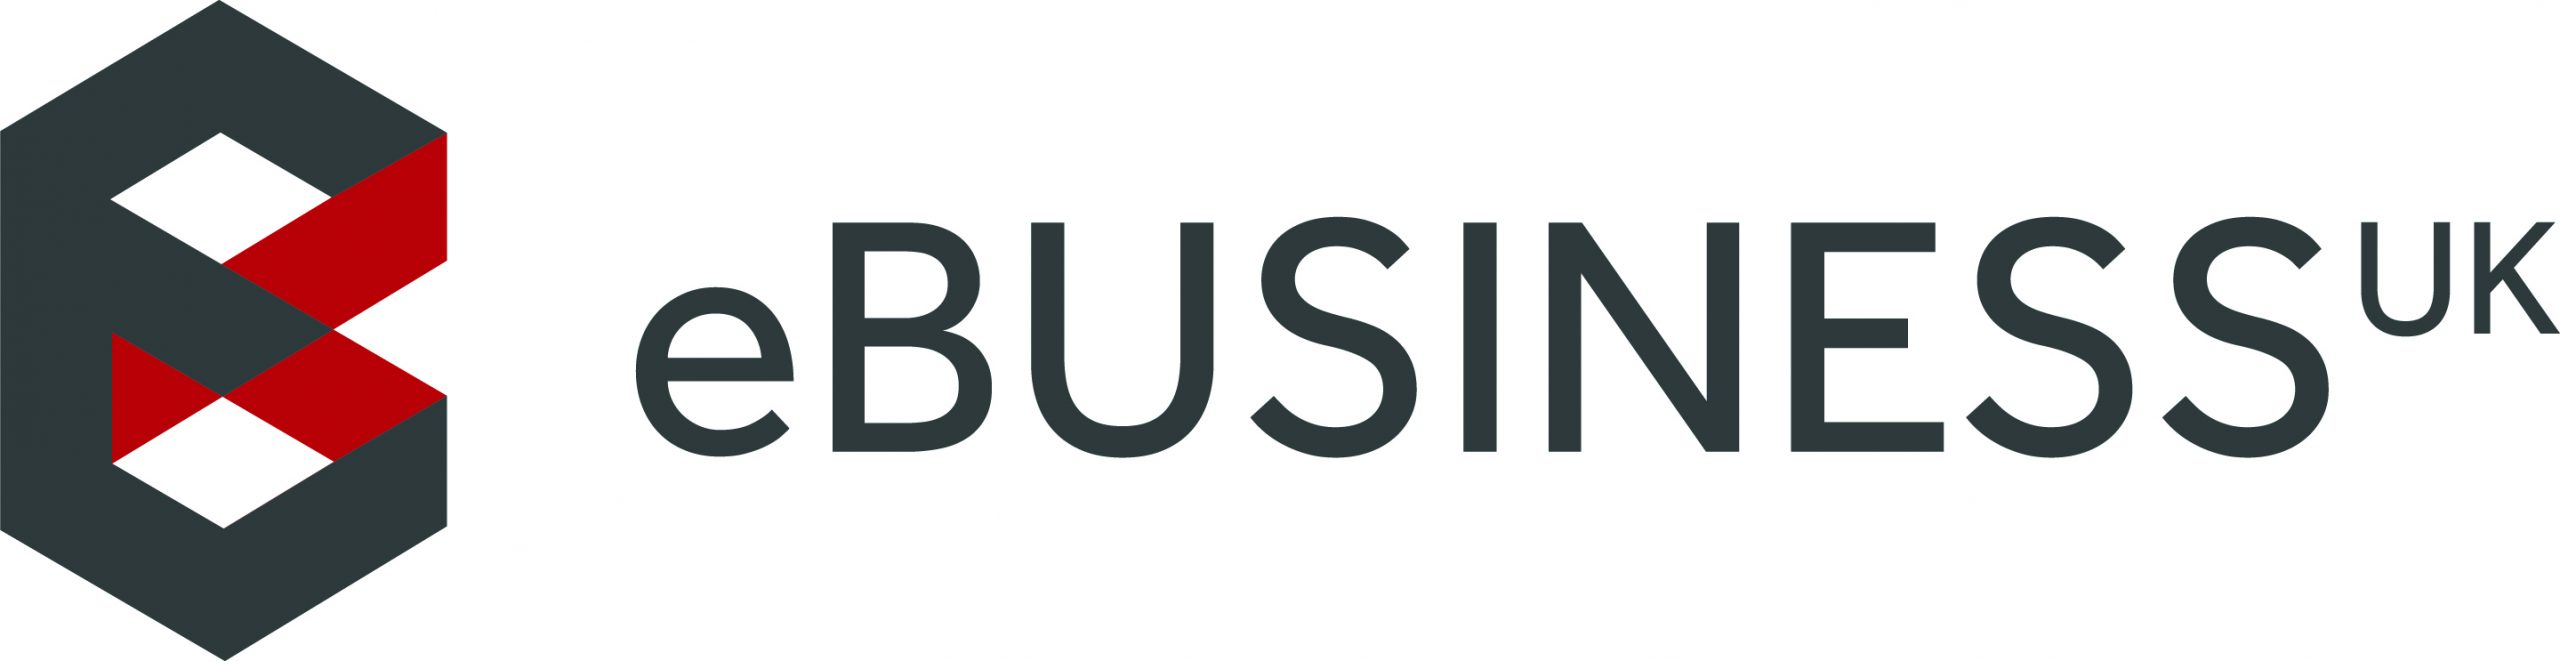 ebusinessuk-logo-landscape